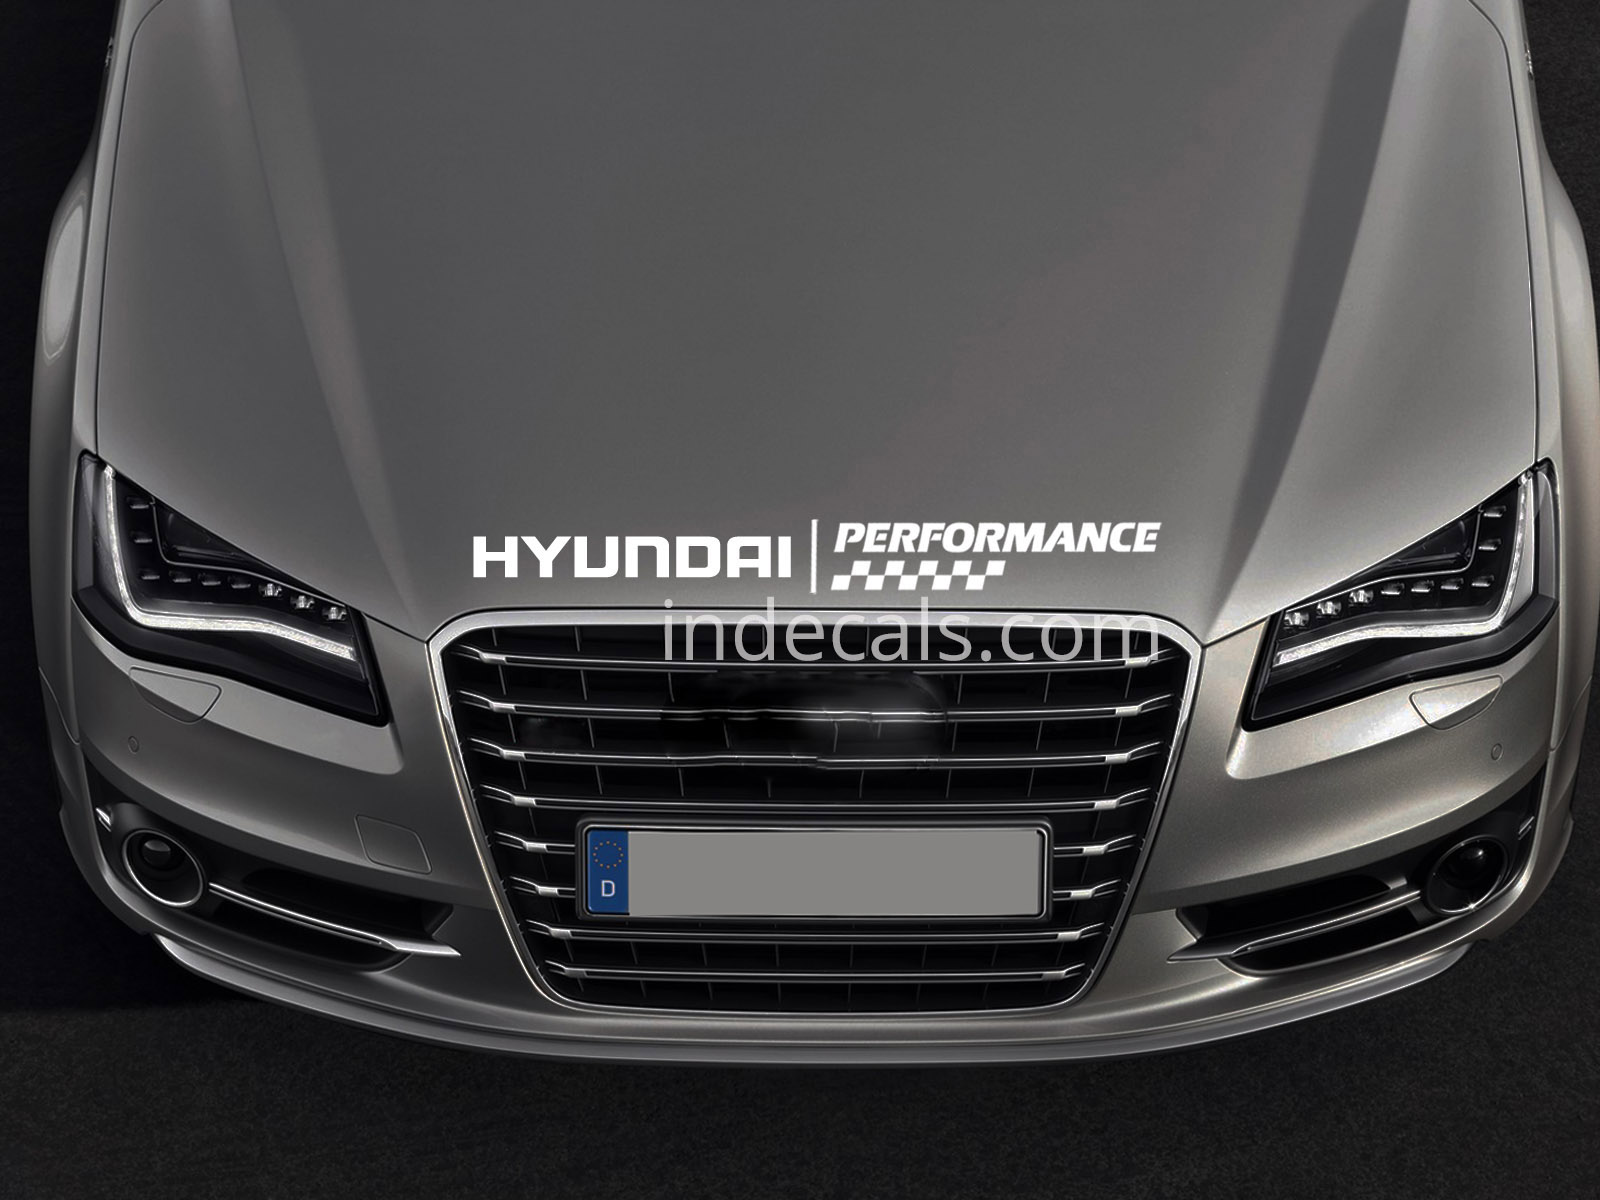 1 x Hyundai Peformance Sticker for Bonnet - White